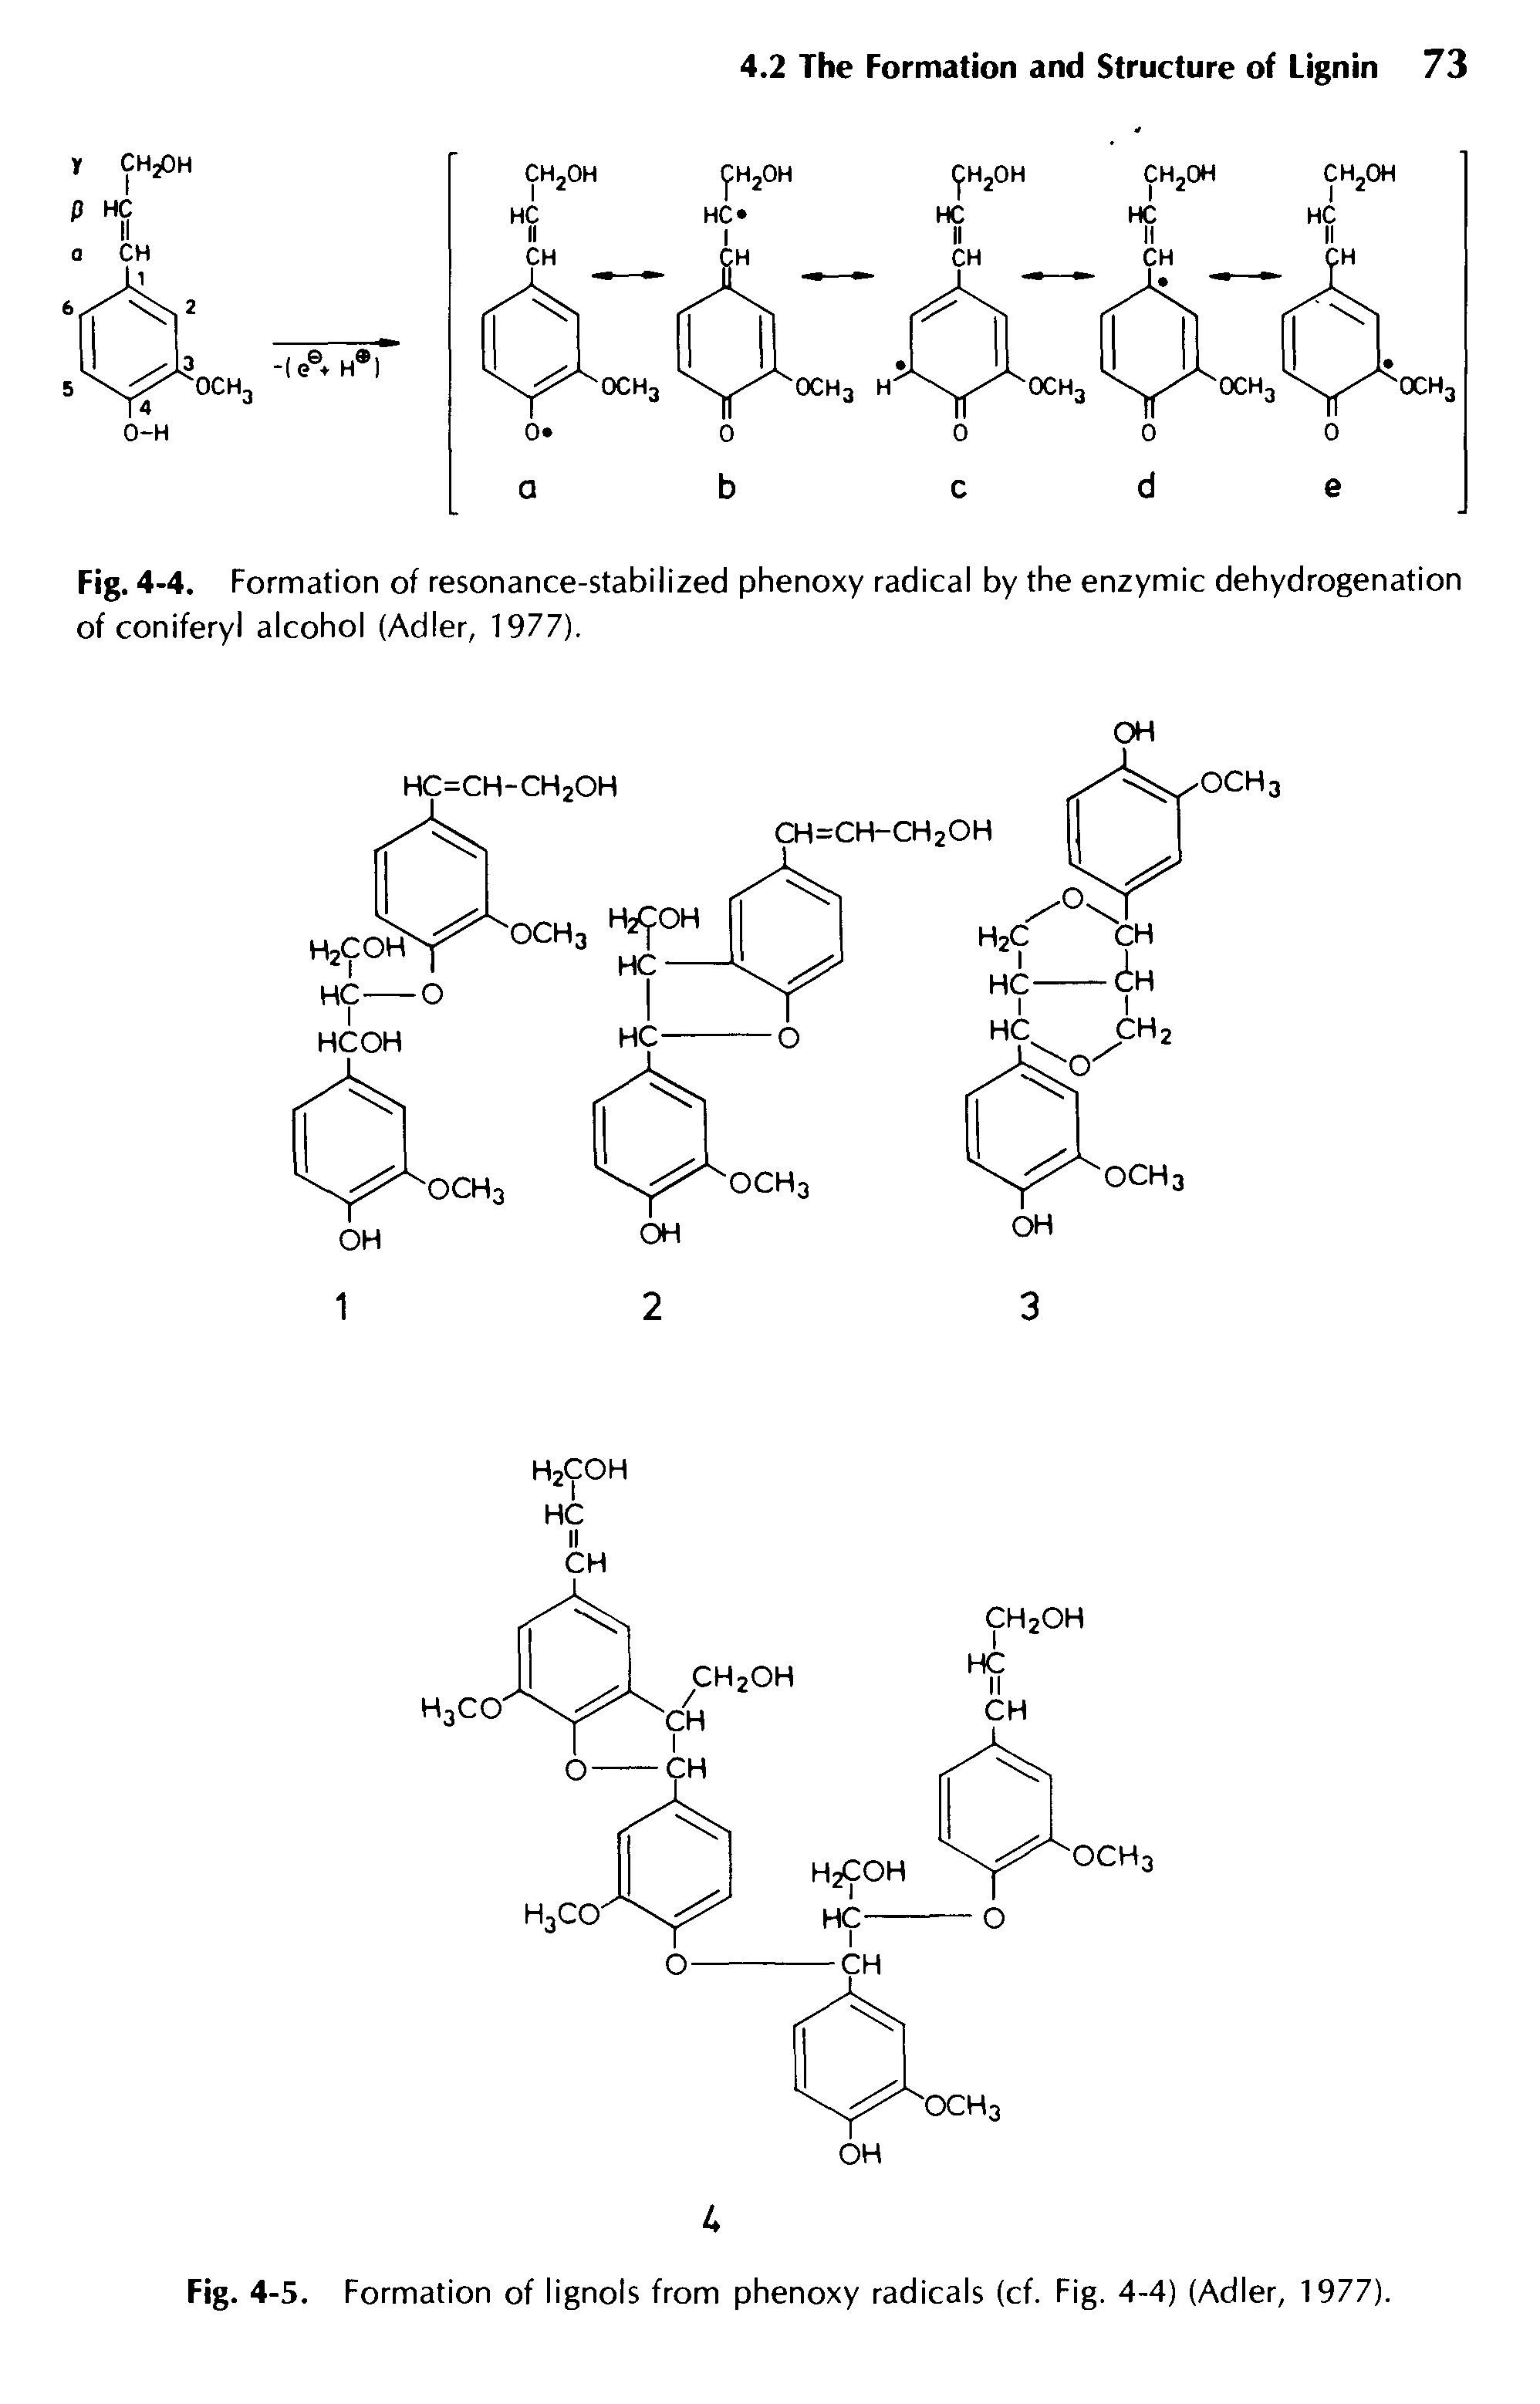 Fig. 4-4. Formation of resonance-stabilized phenoxy radical by the enzymic dehydrogenation of coniferyl alcohol (Adler, 1977).